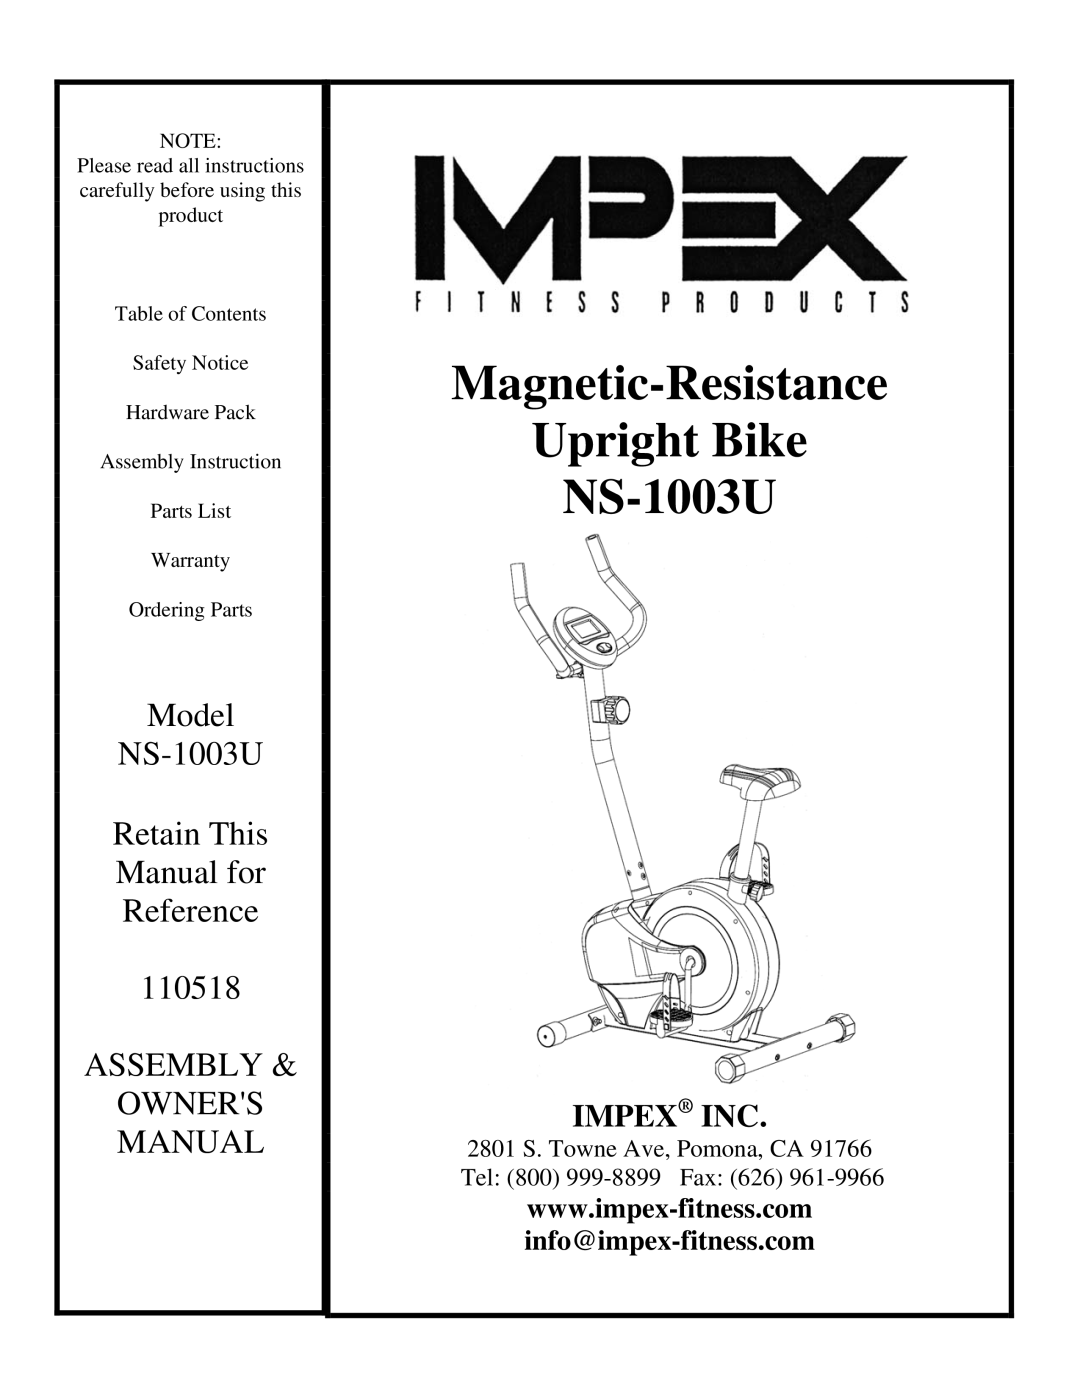 Impex manual Magnetic-Resistance Upright Bike NS-1003U 